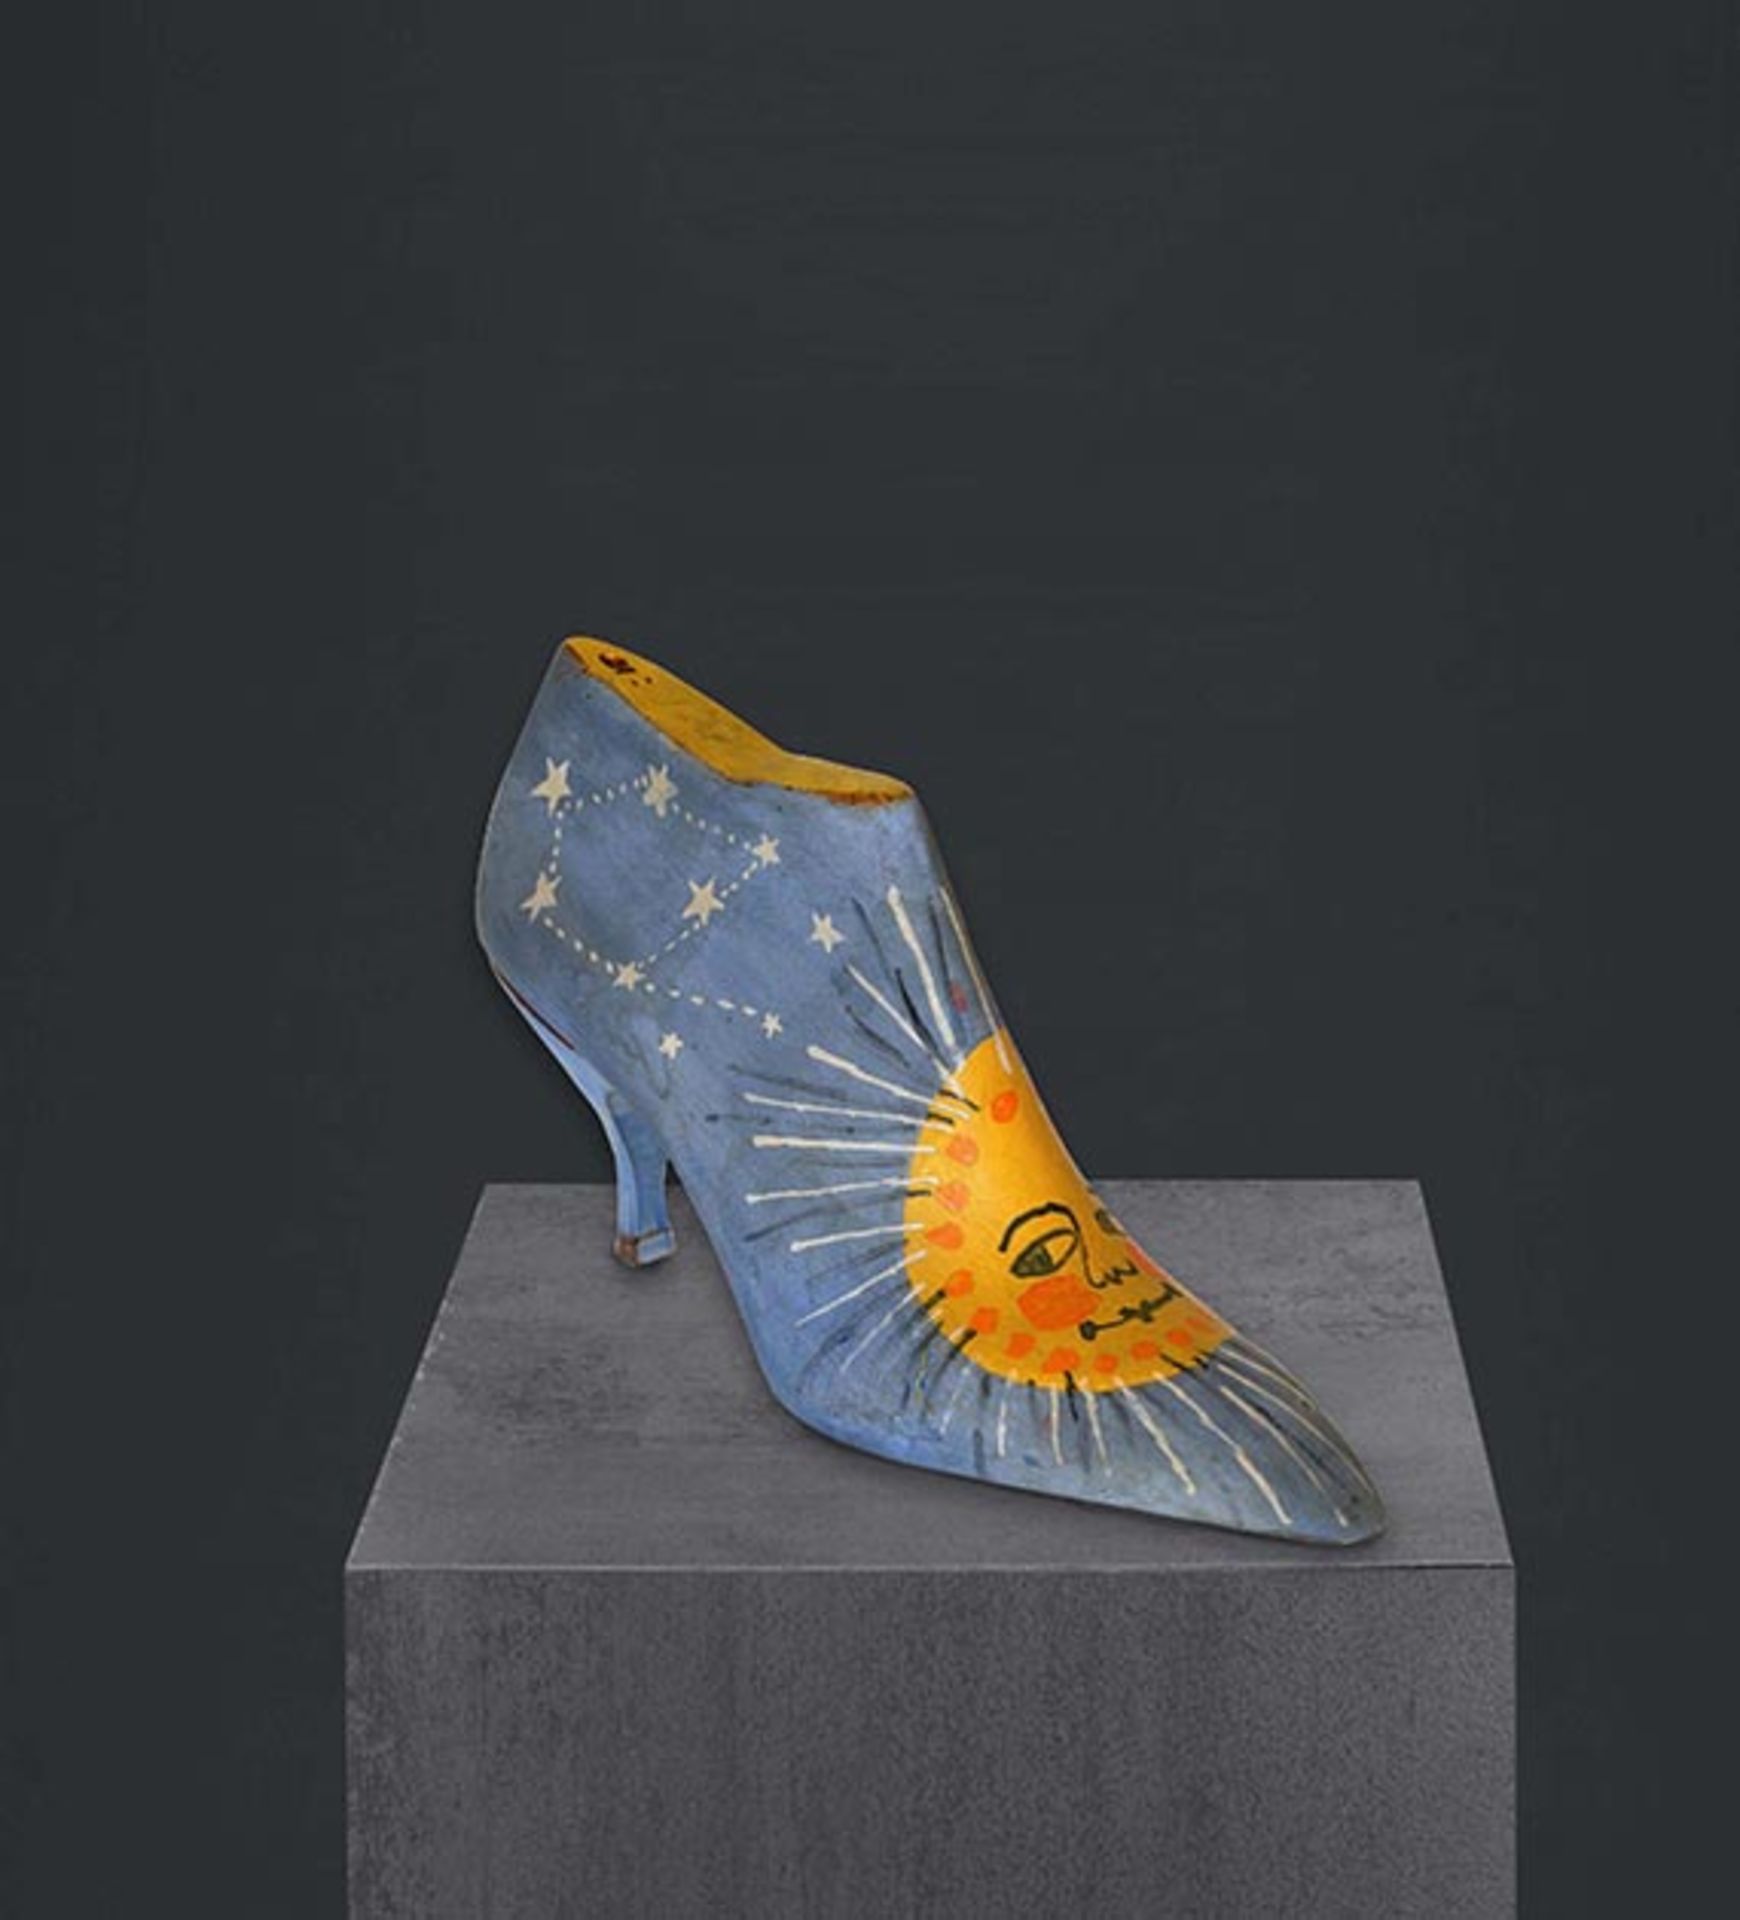 Andy Warhol 1928 Pittsburgh - 1987 New York Shoe. 1955/1957. . Tempera auf Holz. 13,4 x 22,5 x 7